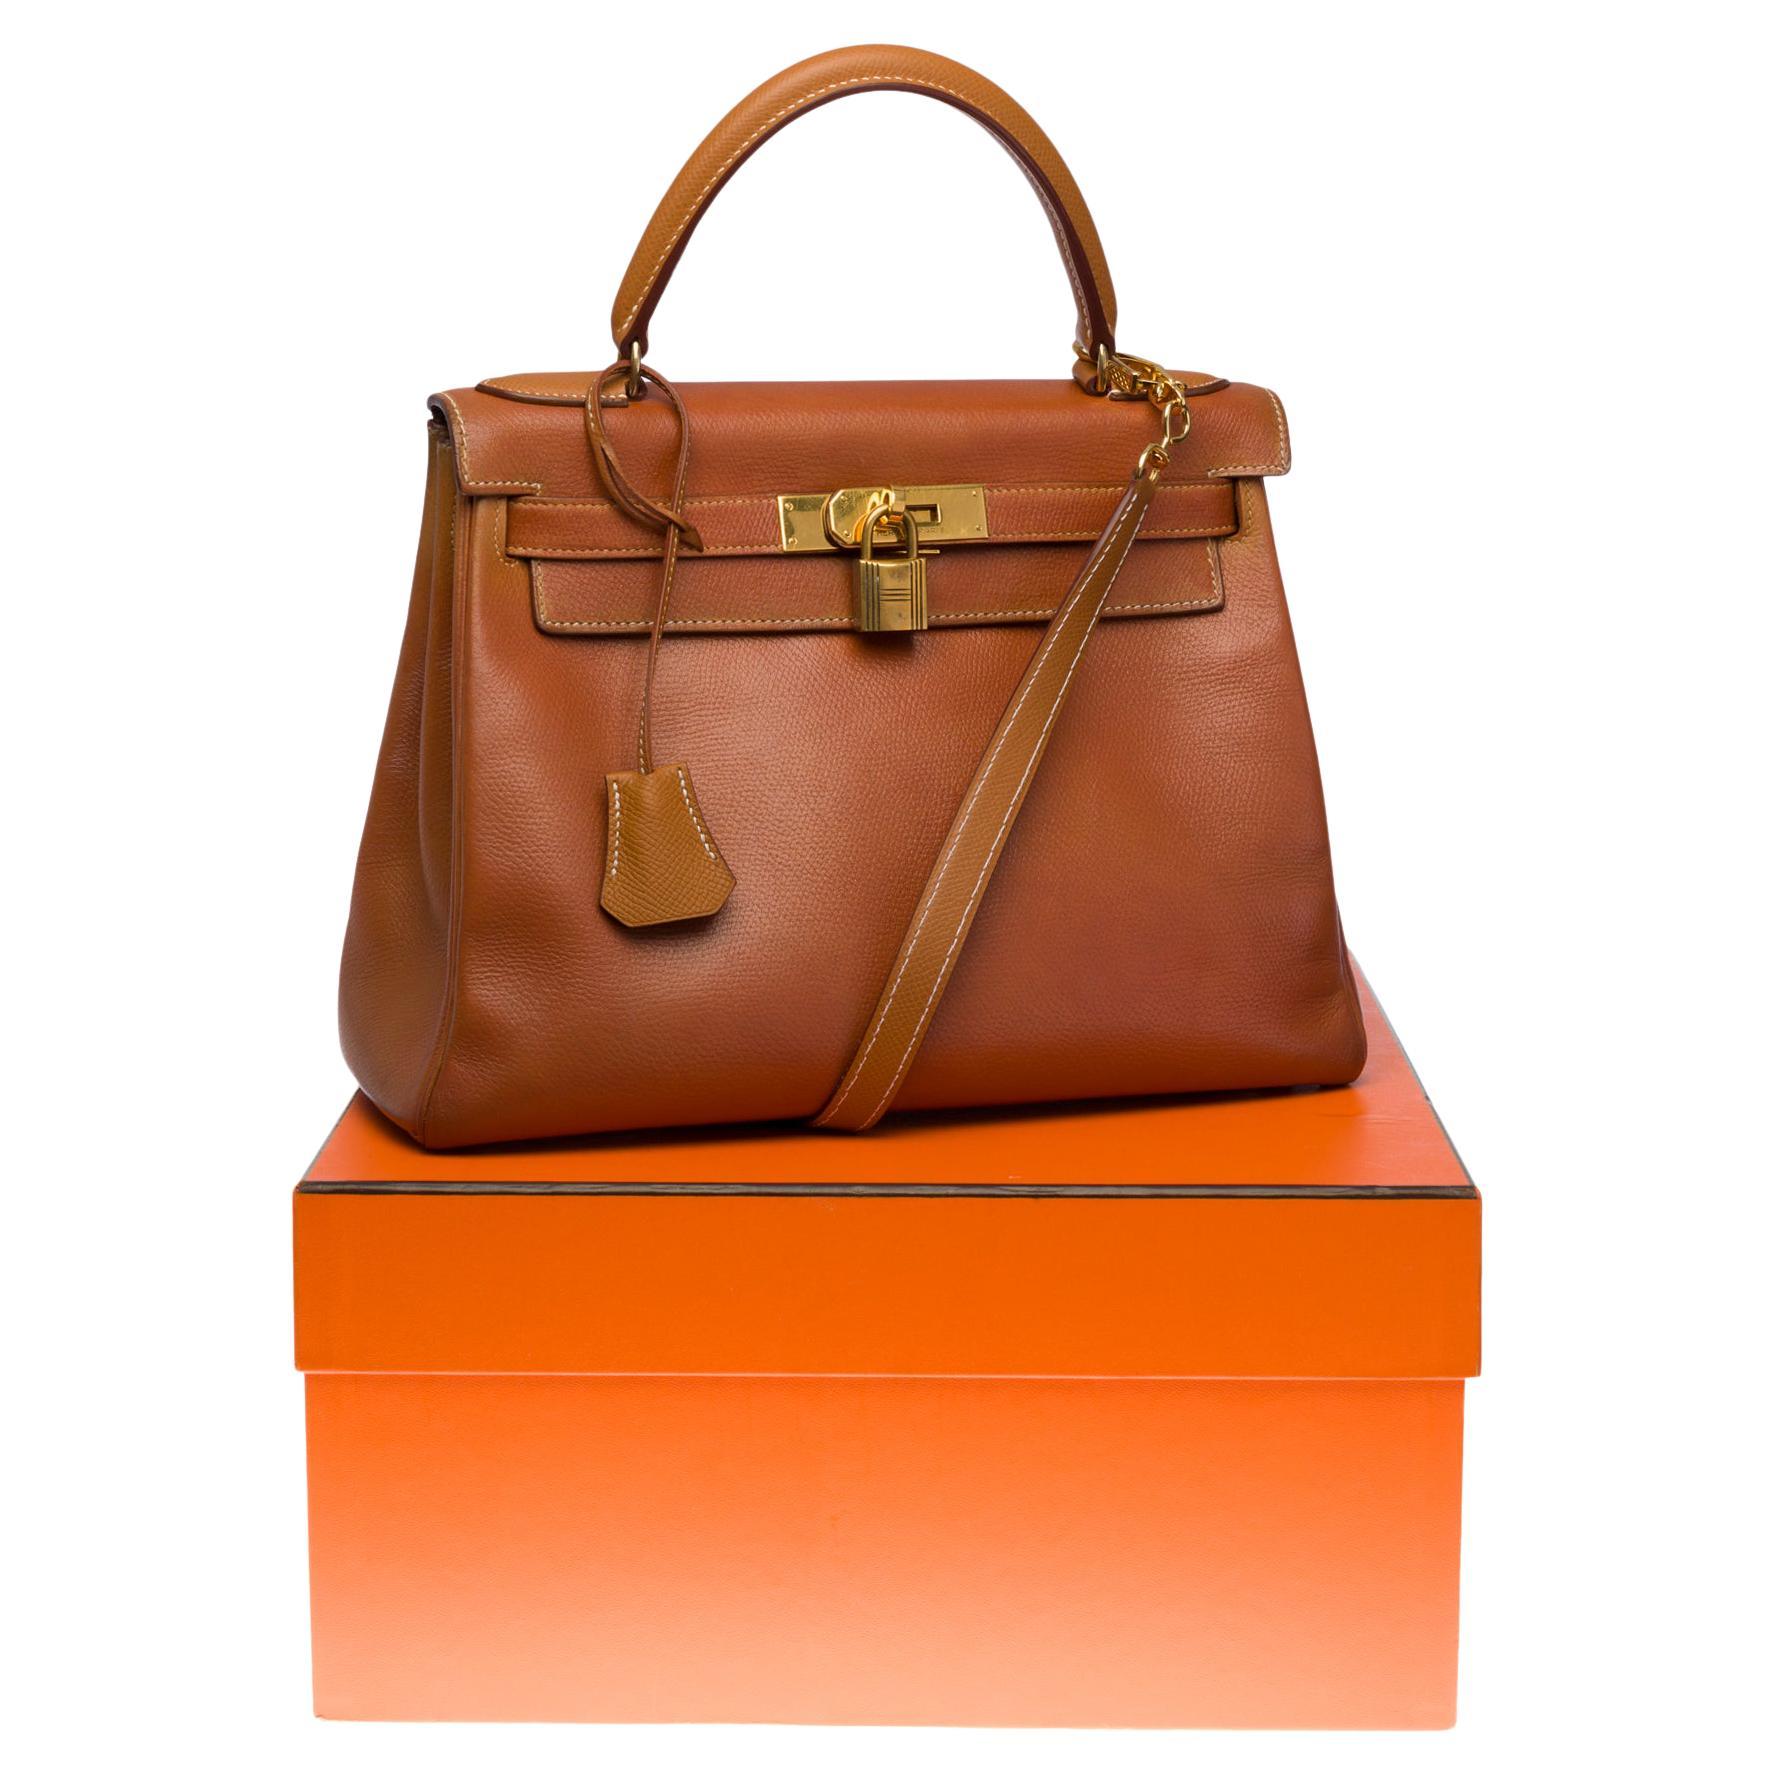 Hermès Kelly 28cm retourné handbag with strap in Gold Courchevel leather, GHW